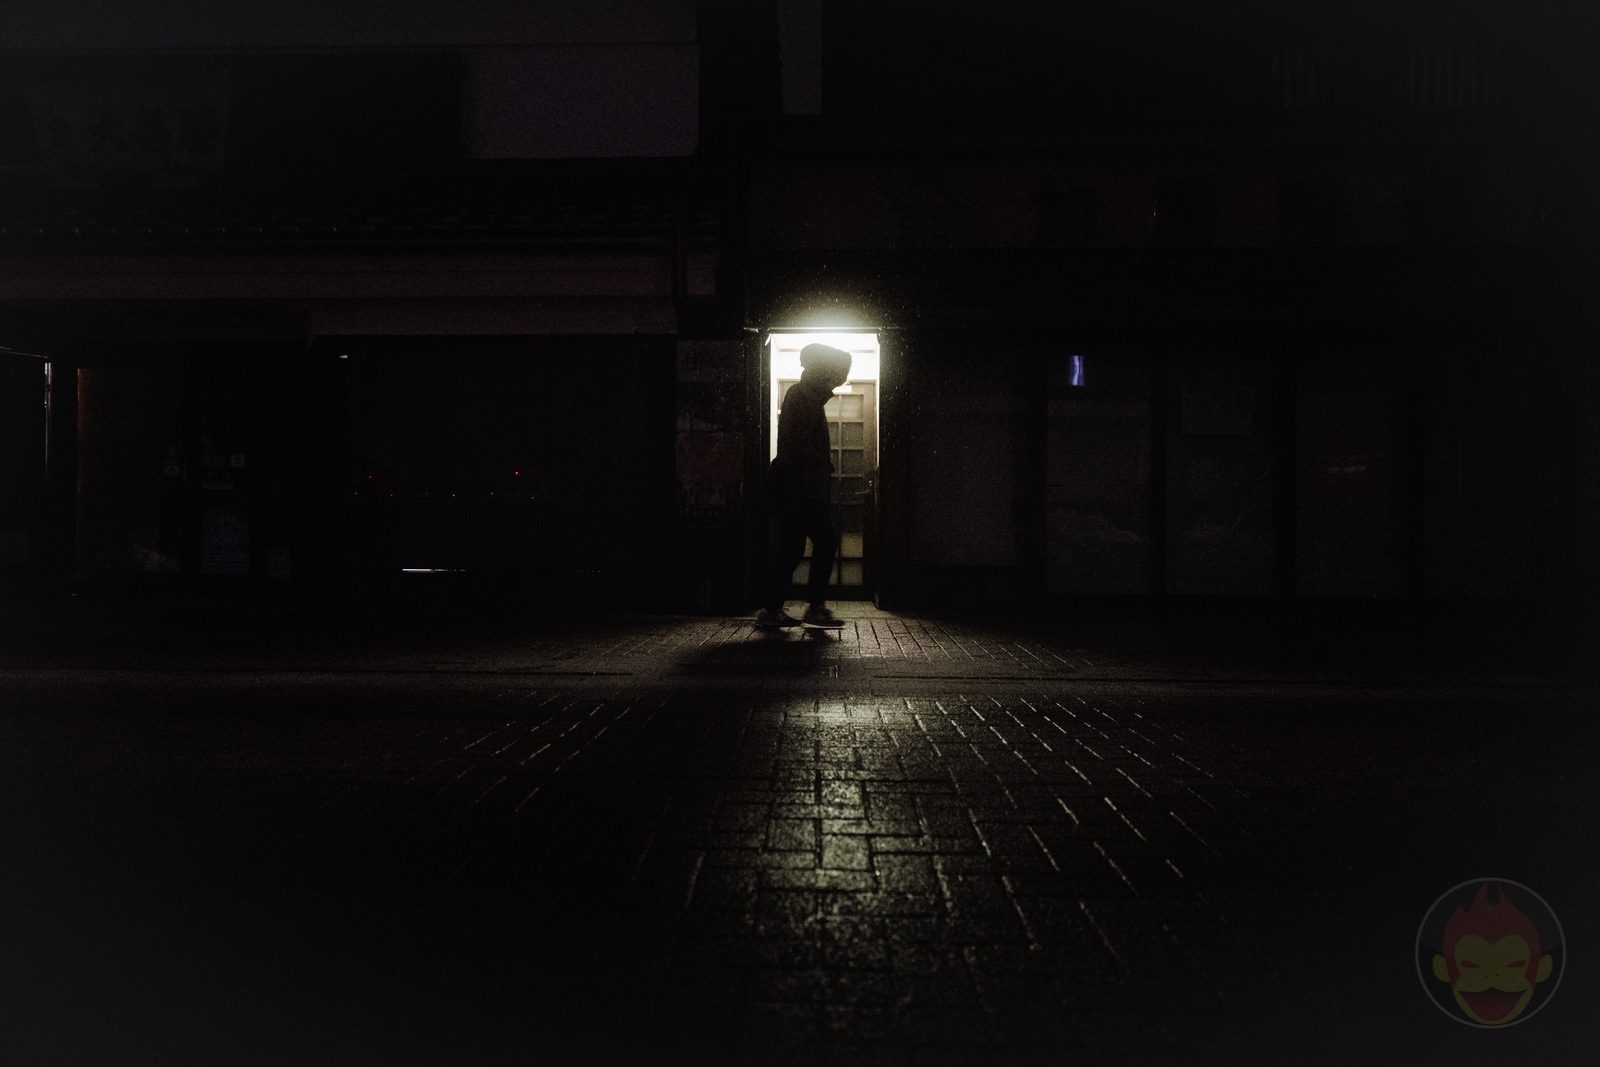 Aizu Wakamatsu night in the rain street photography 10